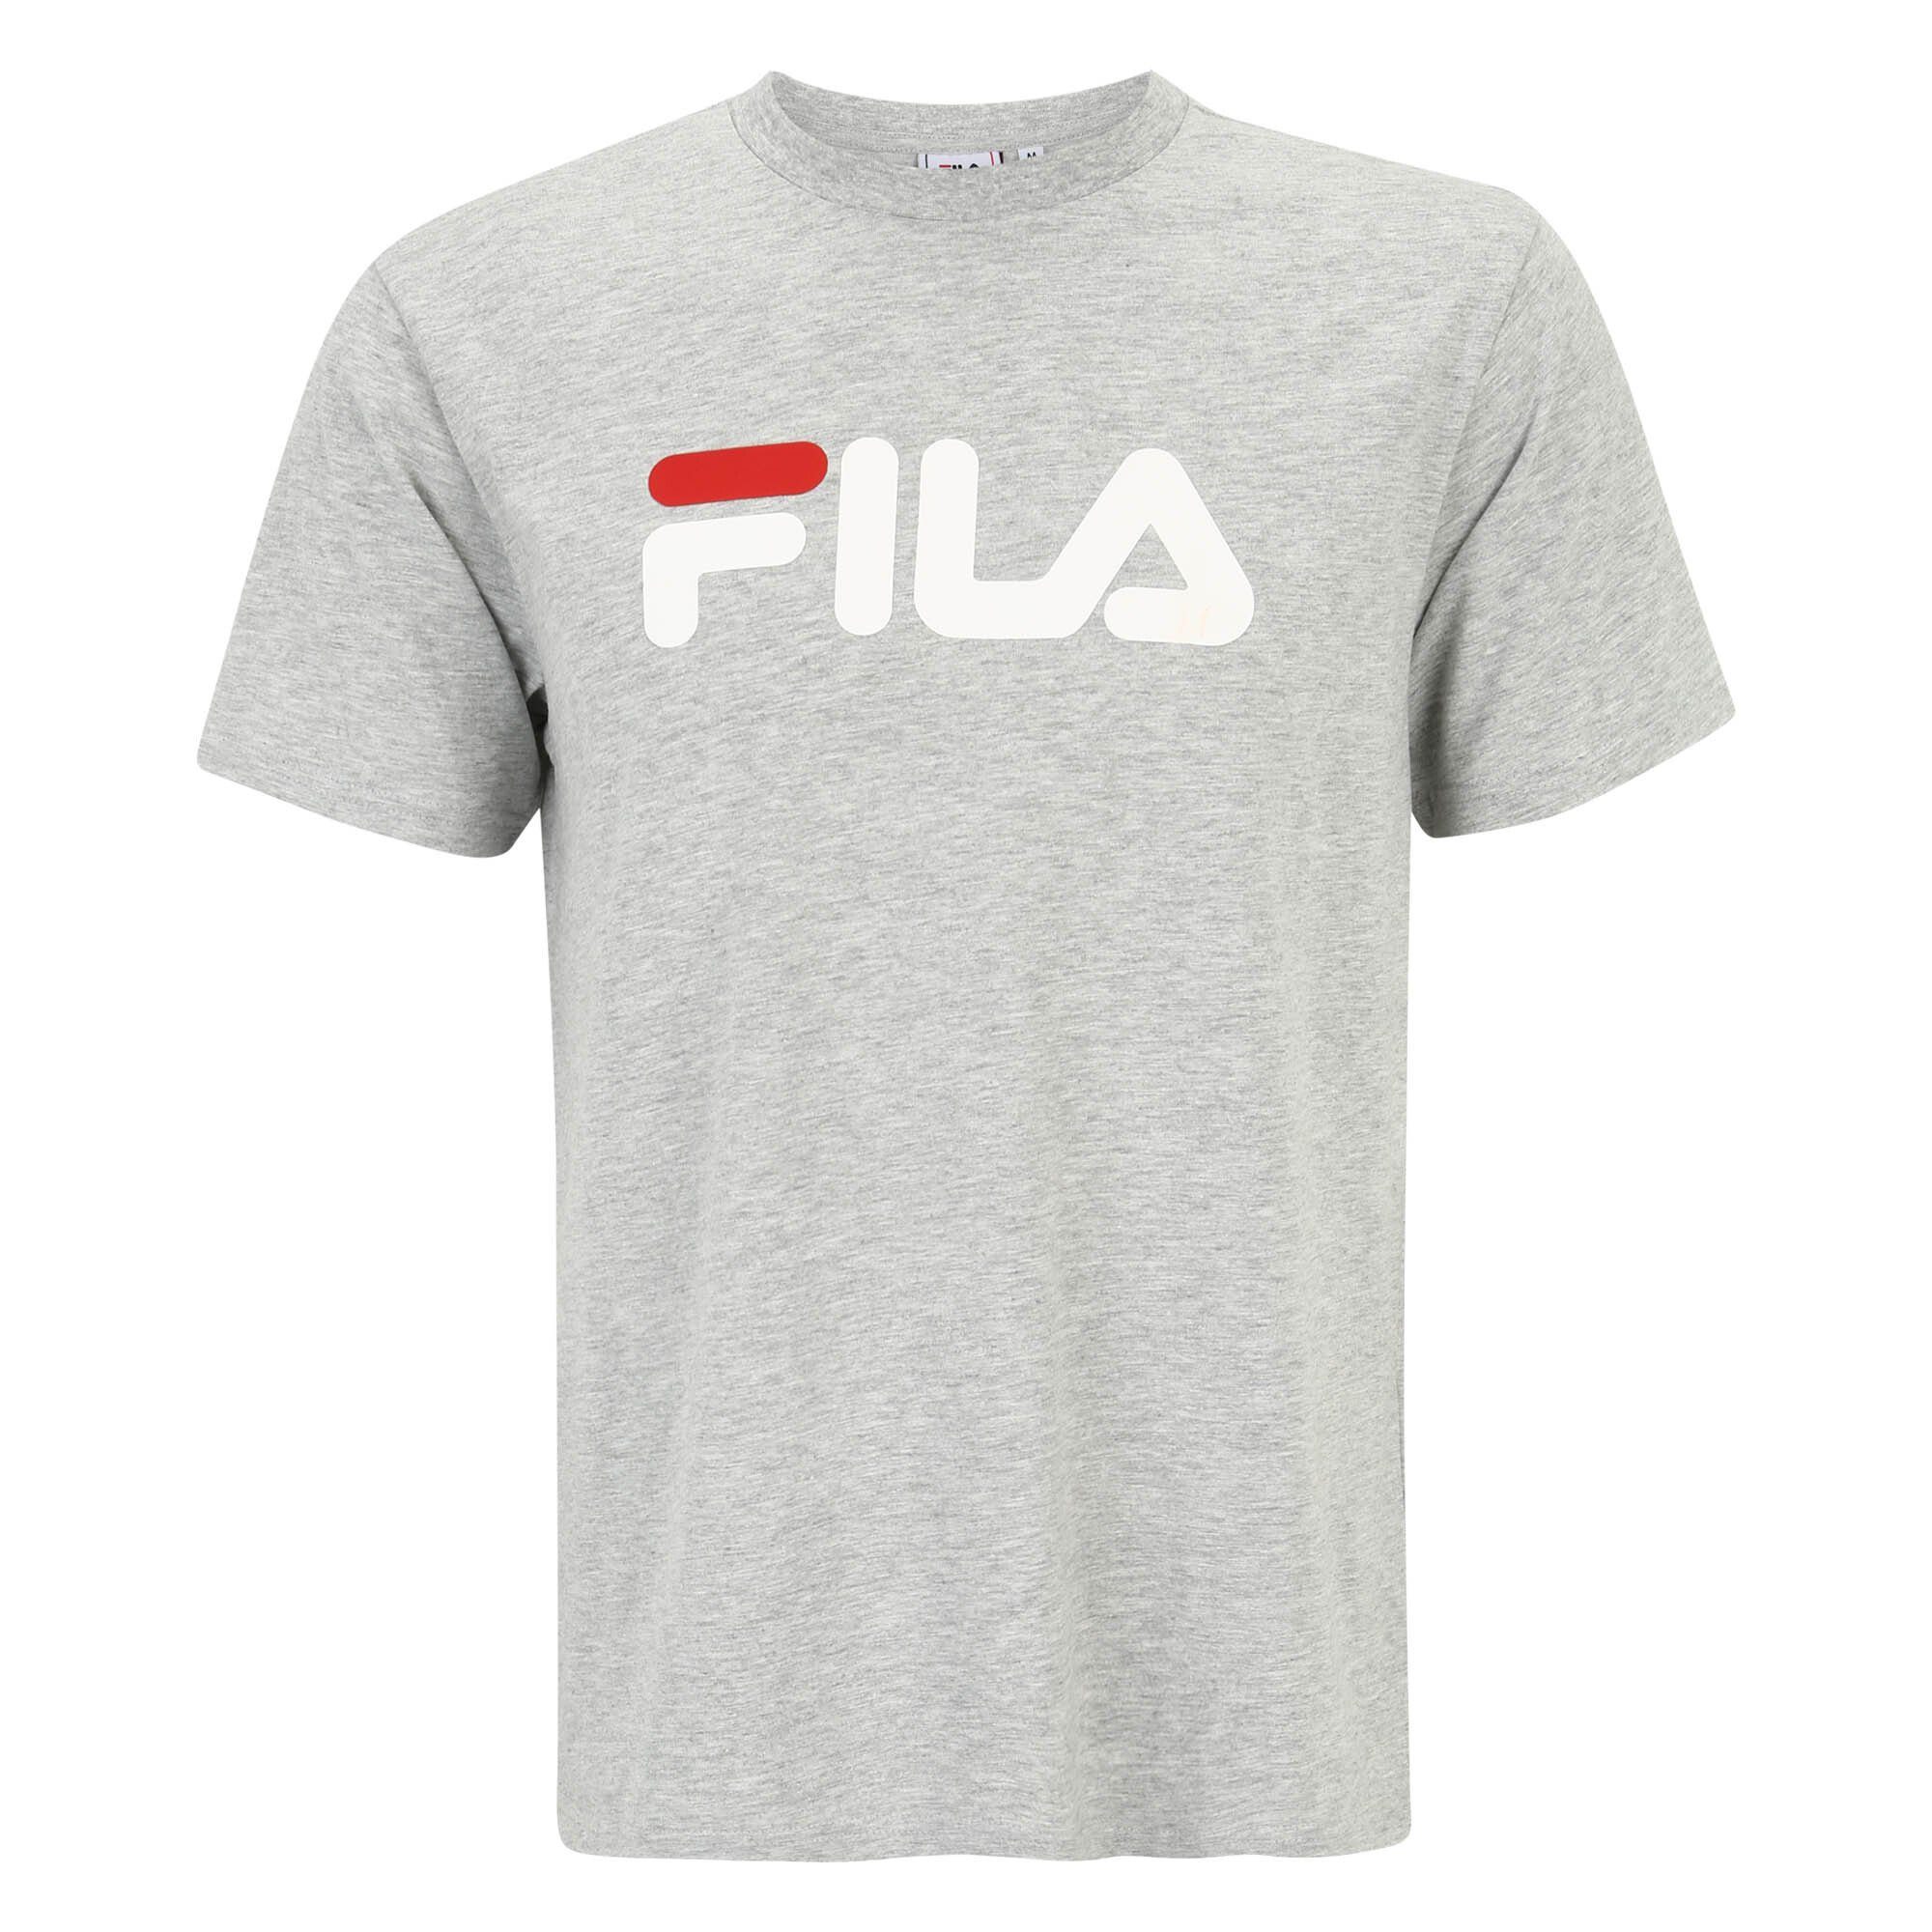 tee, Rundhals, BELLANO Unisex Kurzarm Grau T-Shirt - Fila T-Shirt